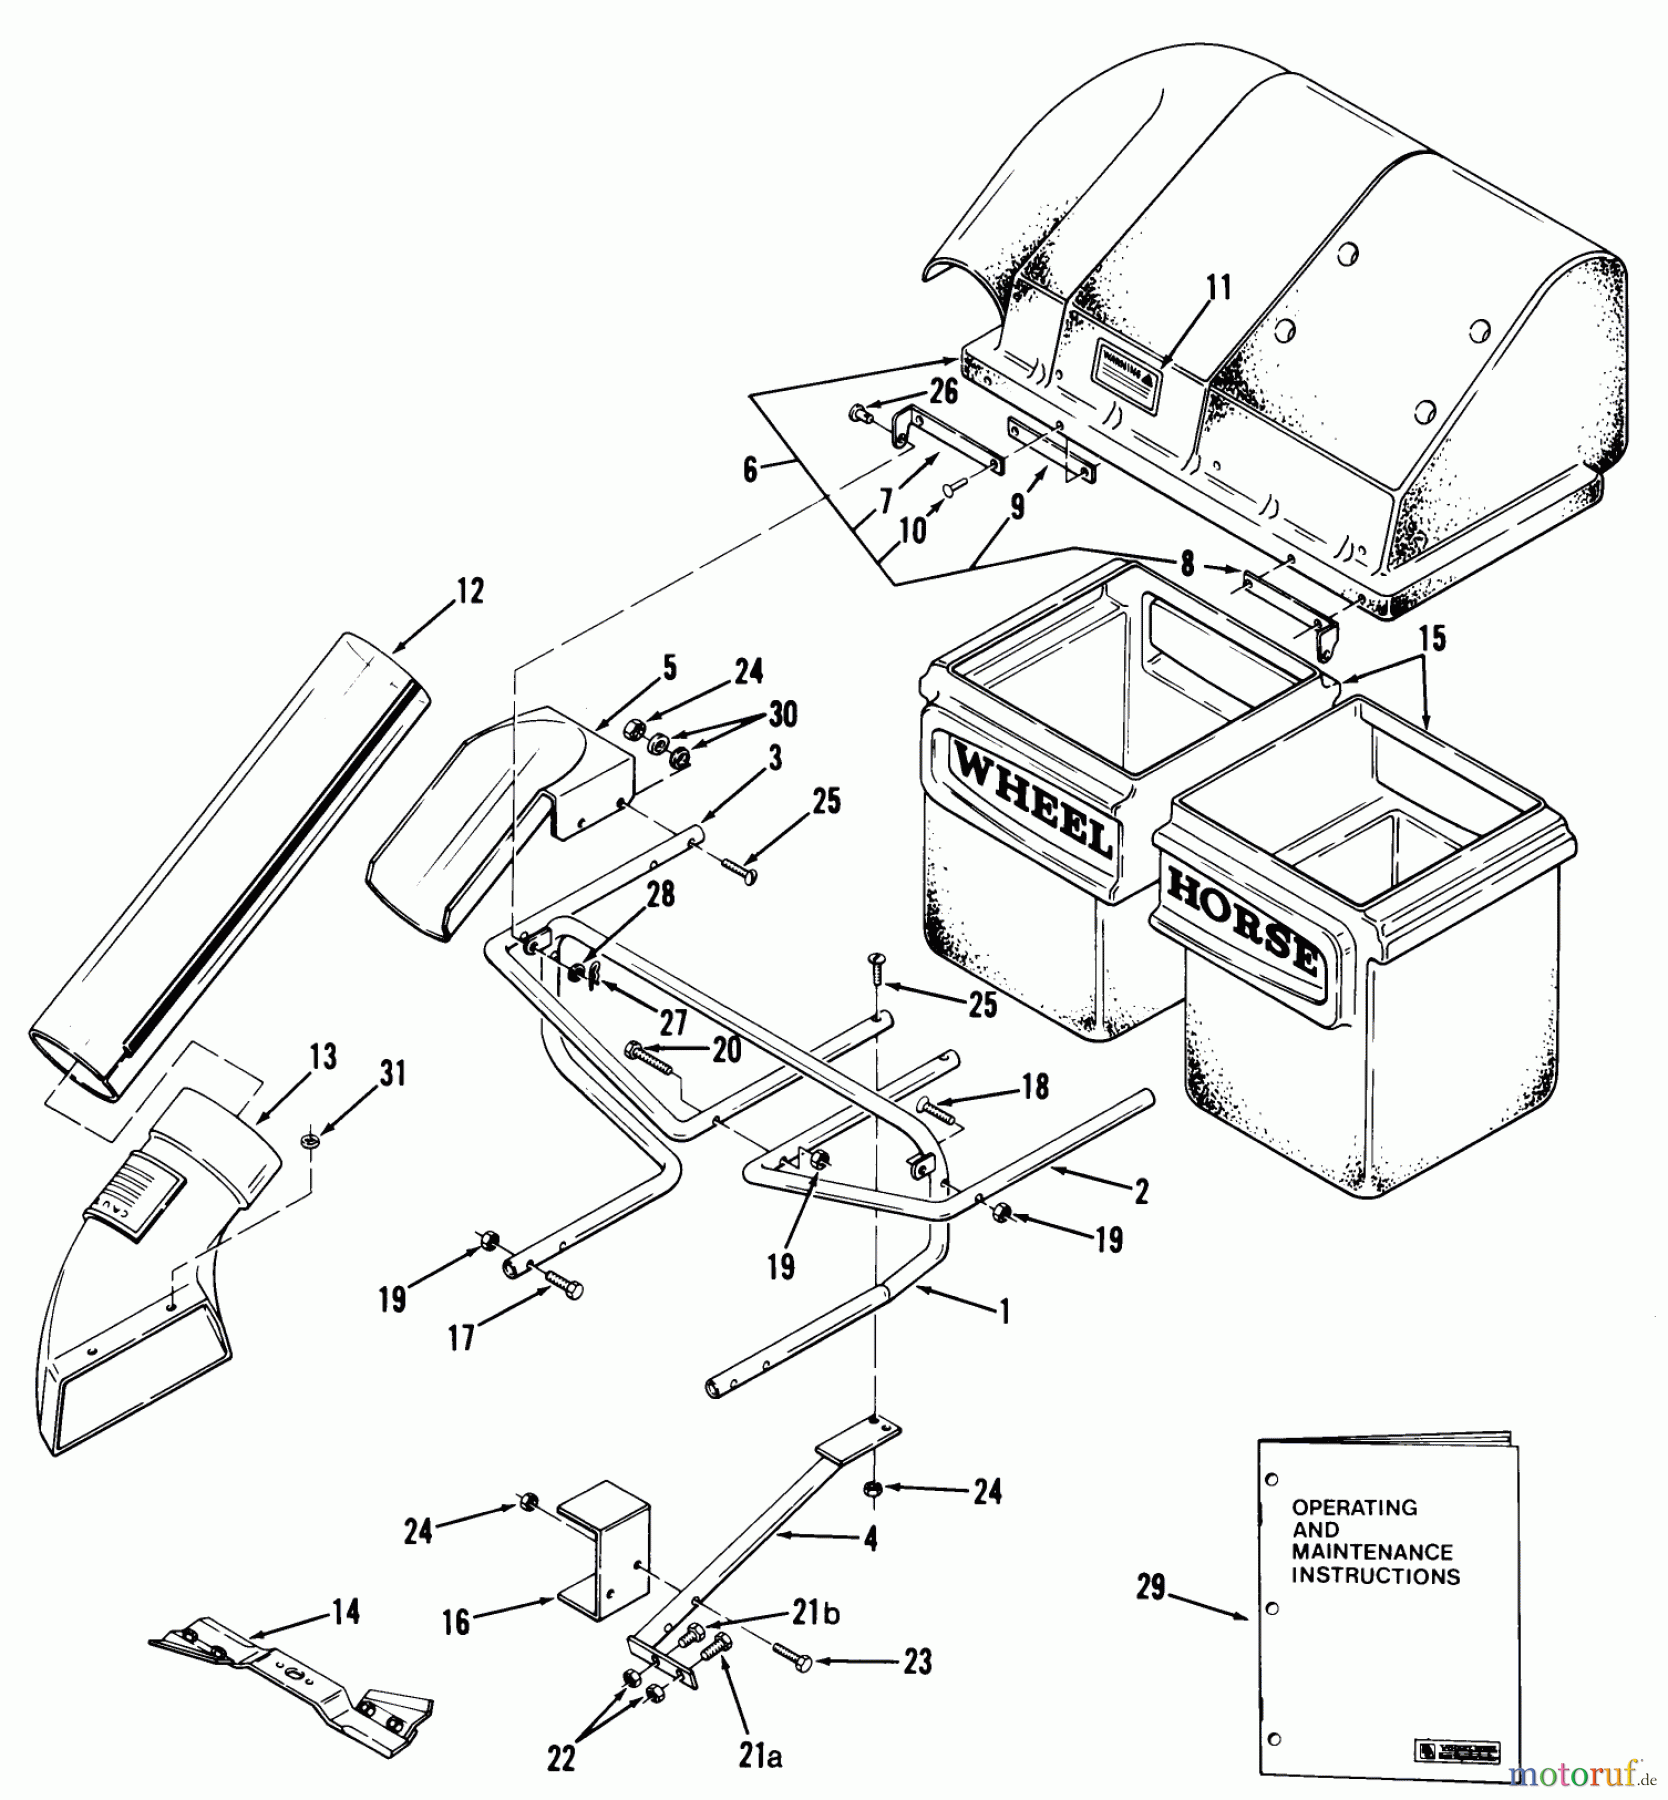  Toro Neu Accessories, Mower 97-06CL01 - Toro Rear Bagger, 1979 REAR GRASS BAGGER-5 BUSHEL (.2 CU. M)(VEHICLE IDENTIFICATION NUMBER 97-06CL01)